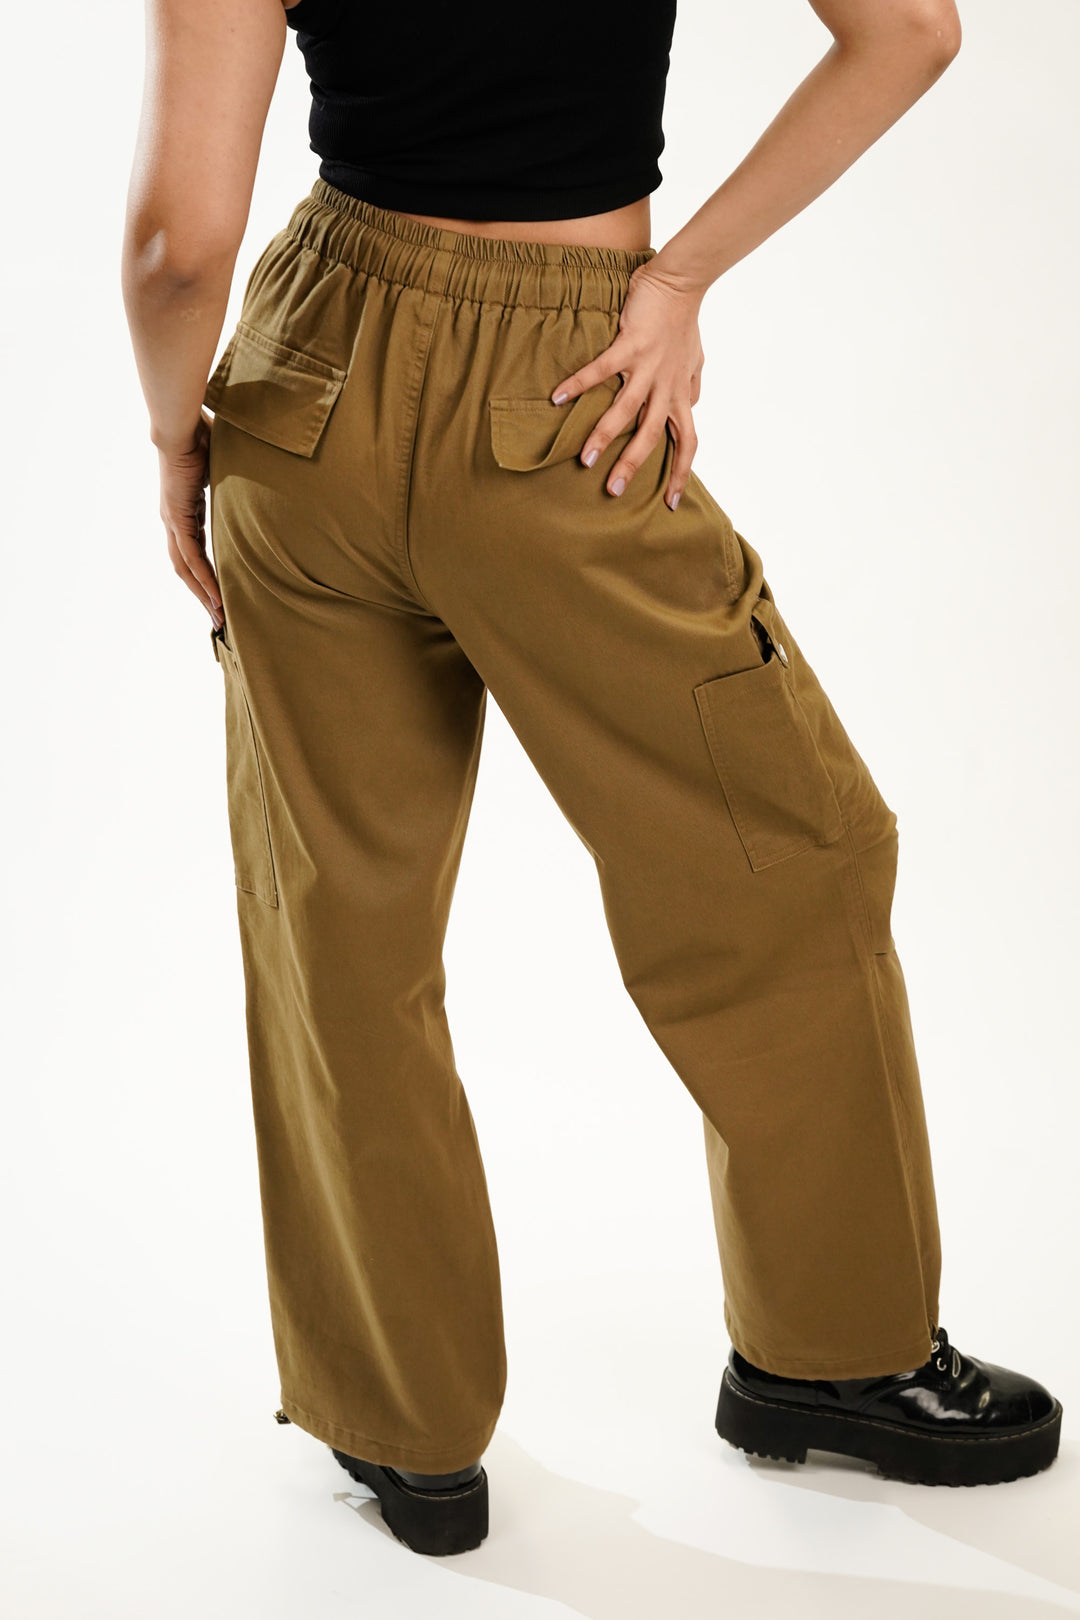 flap pocket cargo pants for women